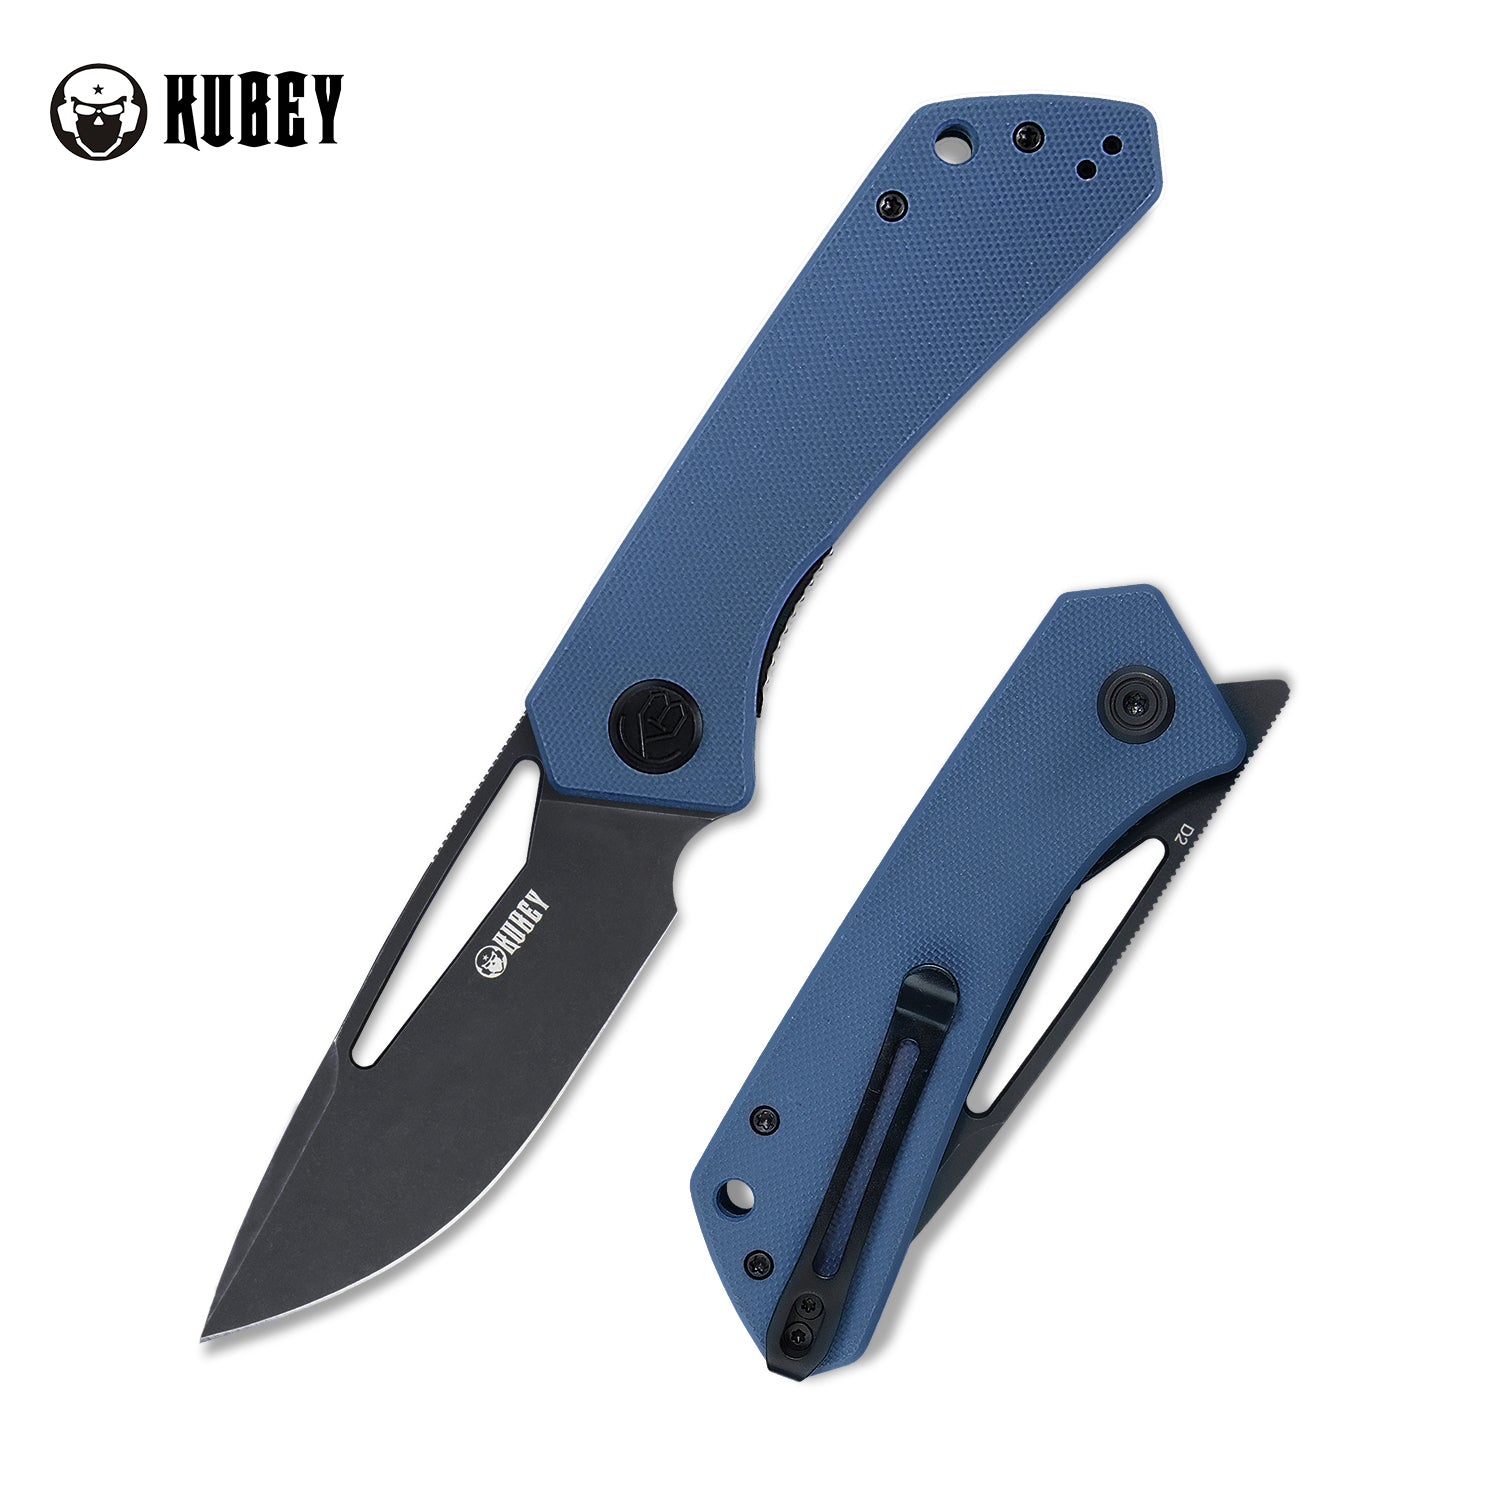 Kubey Thalia Klappmesser Front Flipper EDC Pocket Folding Knife Denim Blue G10 Handle 3.27" Dark Stonewahsed D2 KU331C